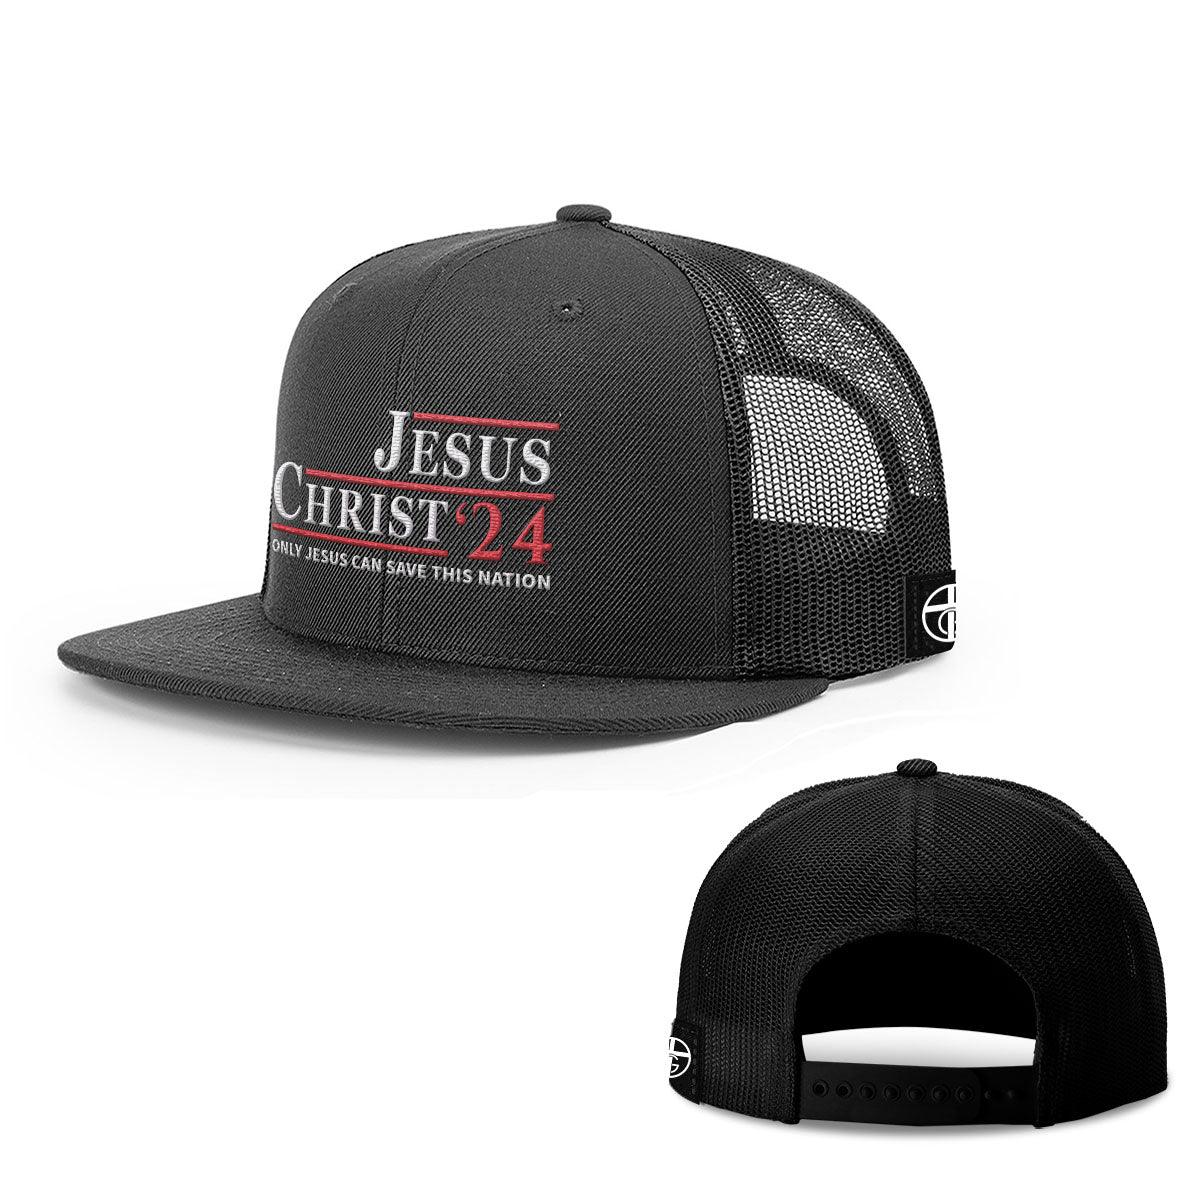 Jesus Christ'24 Hats, Snapback Flatbill / Full Black / One Size